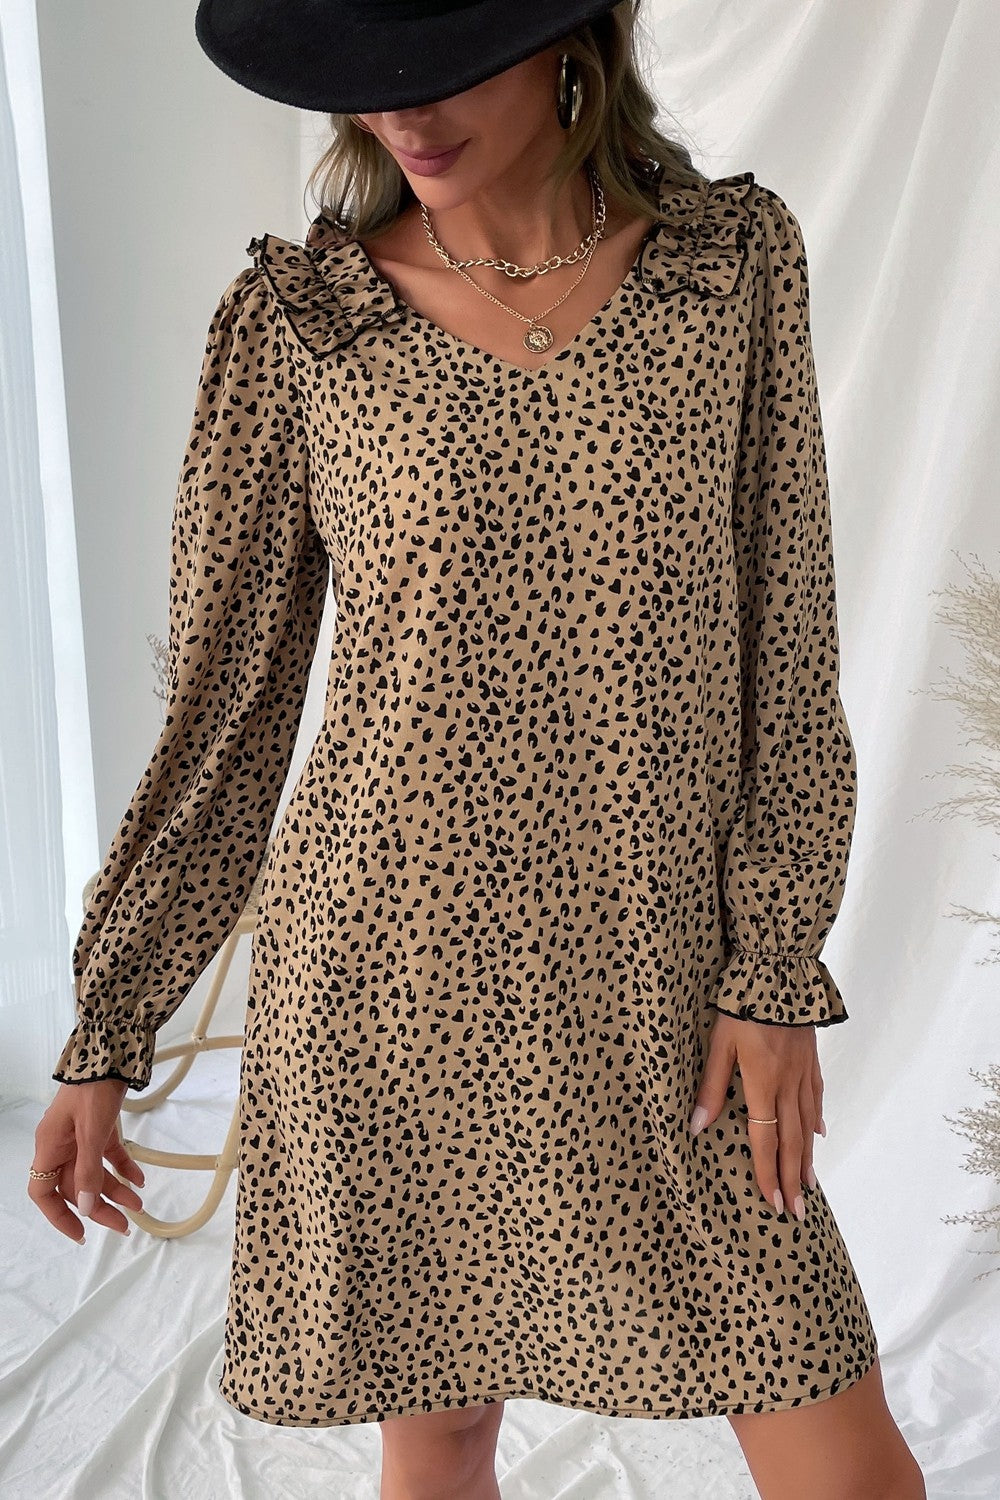 Leopard Frill Trim V-Neck Dress